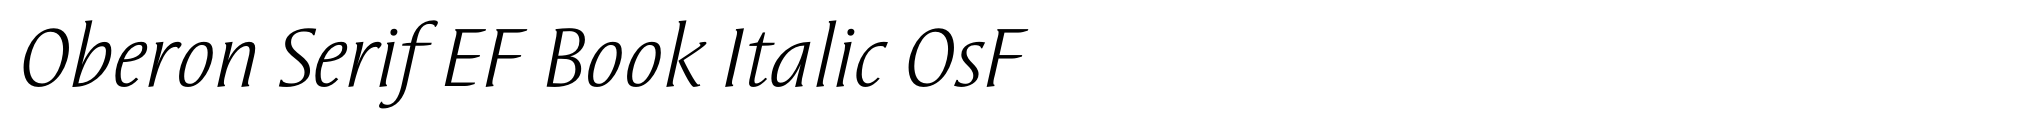 Oberon Serif EF Book Italic OsF image